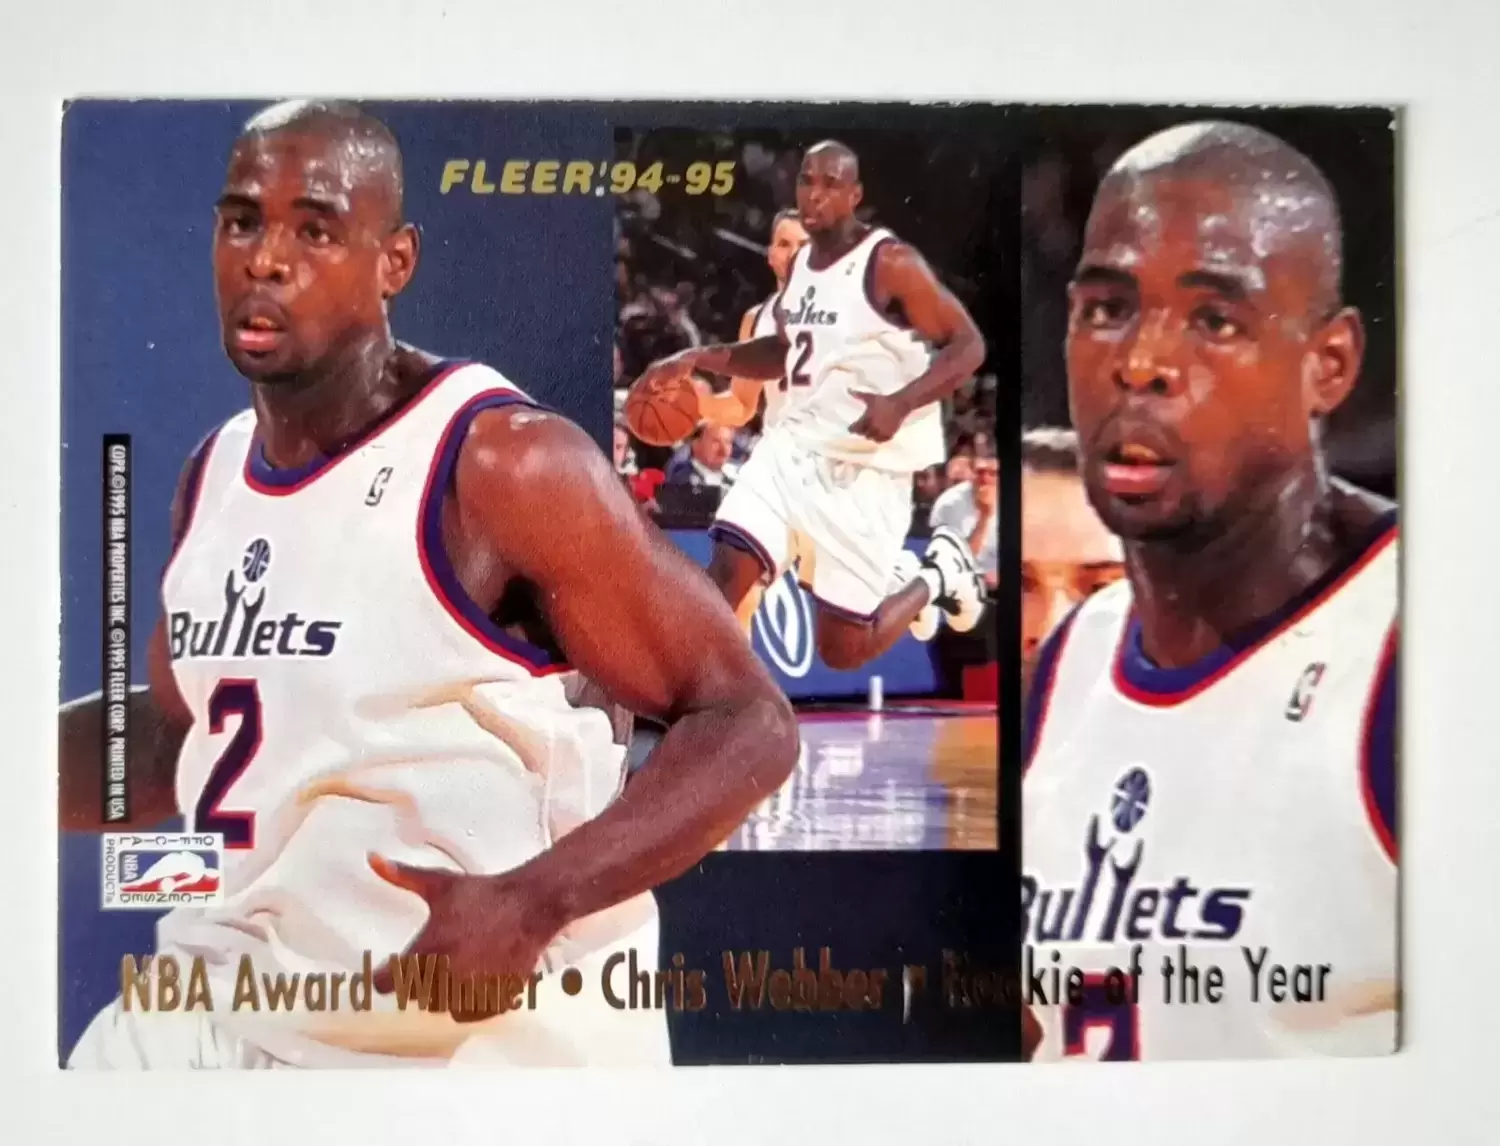 Fleer 94-95 / NBA European 1994-1995 - Chris Webber / Dell Curry